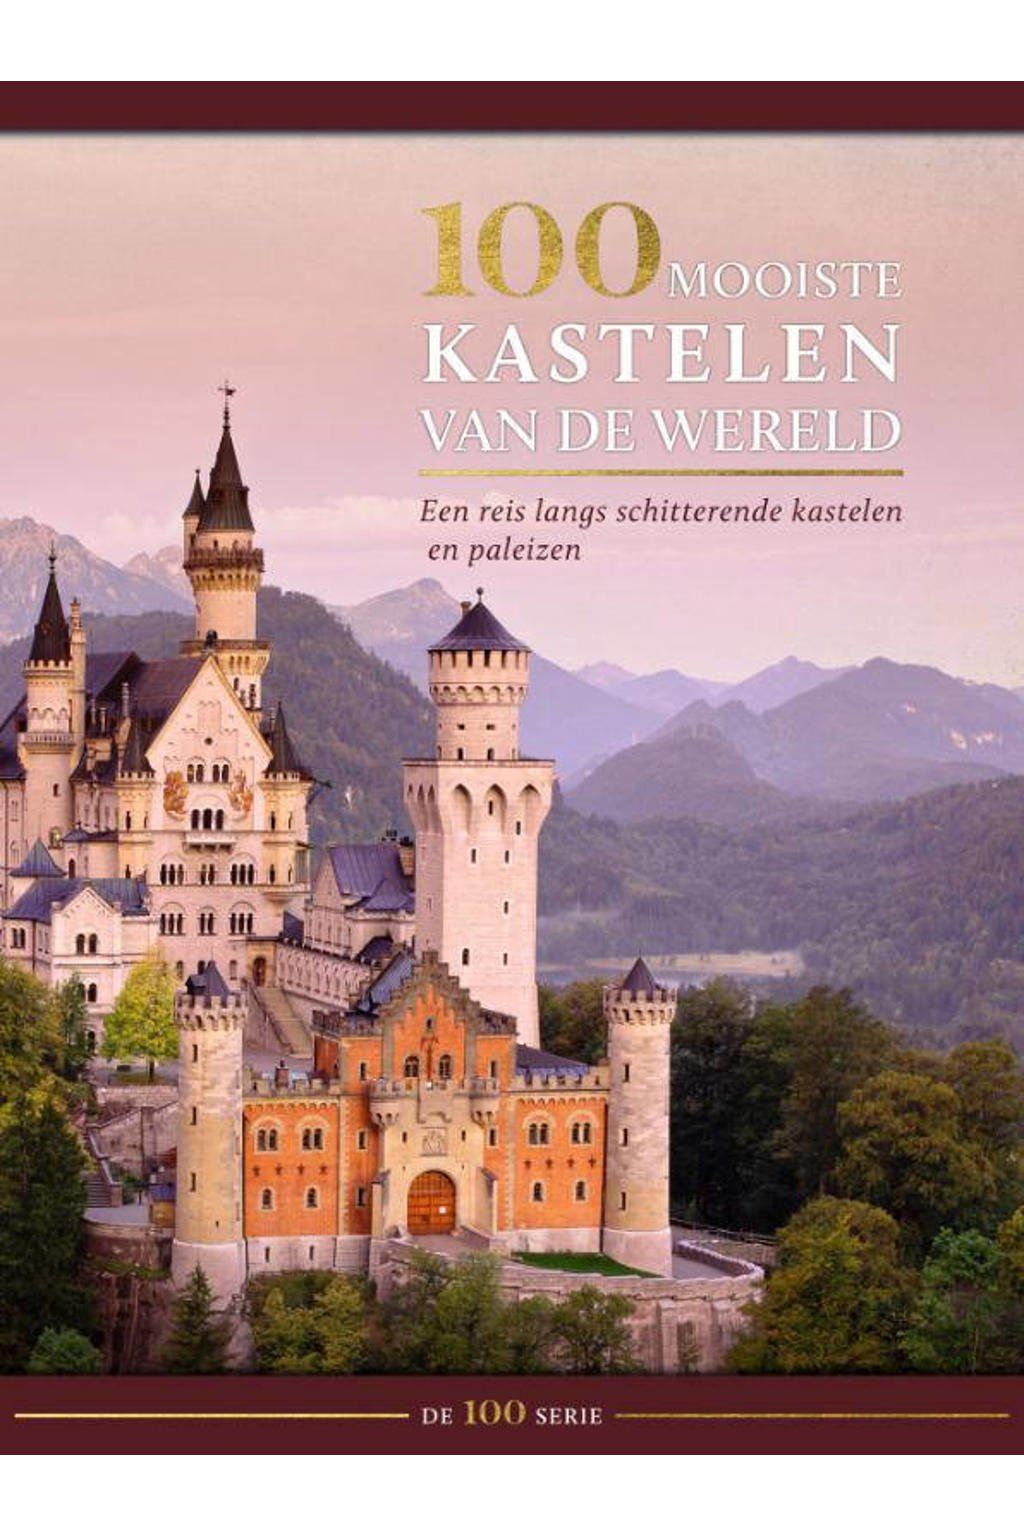 De 100 serie: 100 mooiste kastelen van de wereld - Hannah Brooks-Motl, Eileen Bernardi, Marc Hakim, e.a.